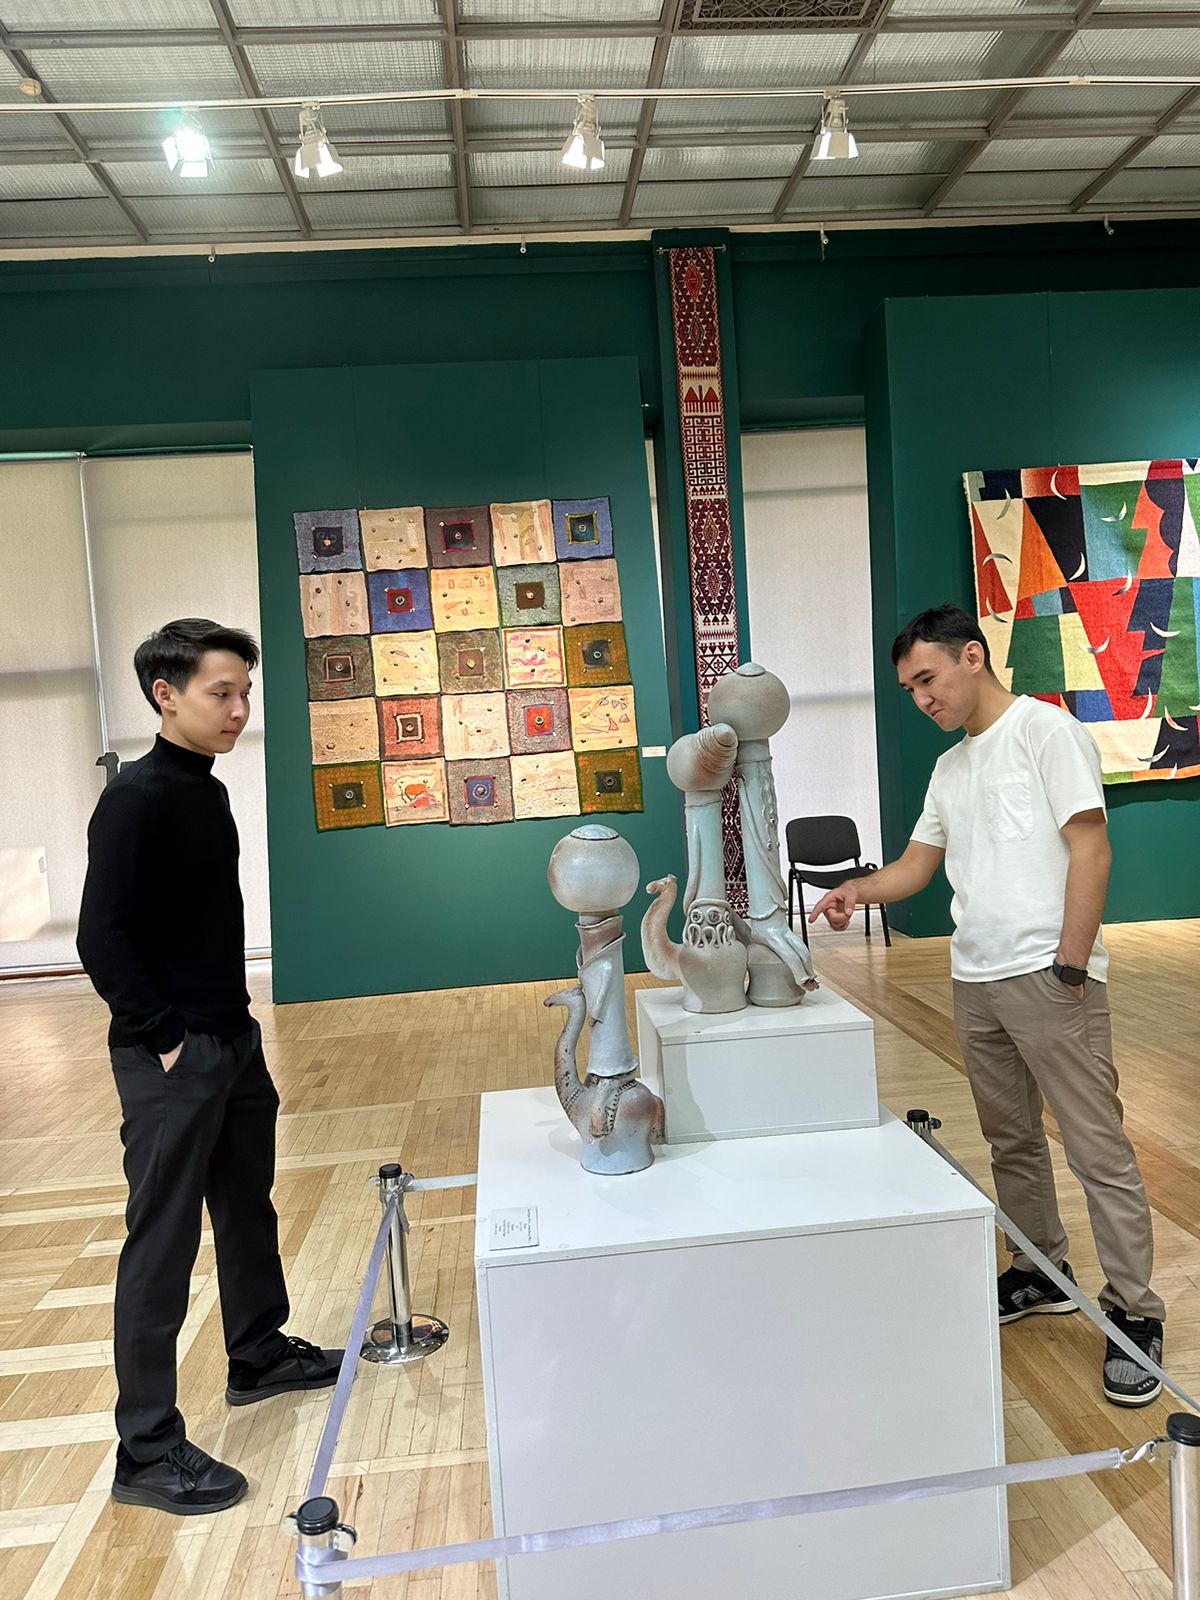 students visited the anniversary retrospective exhibition of Vladimir Kireev “Meeting”